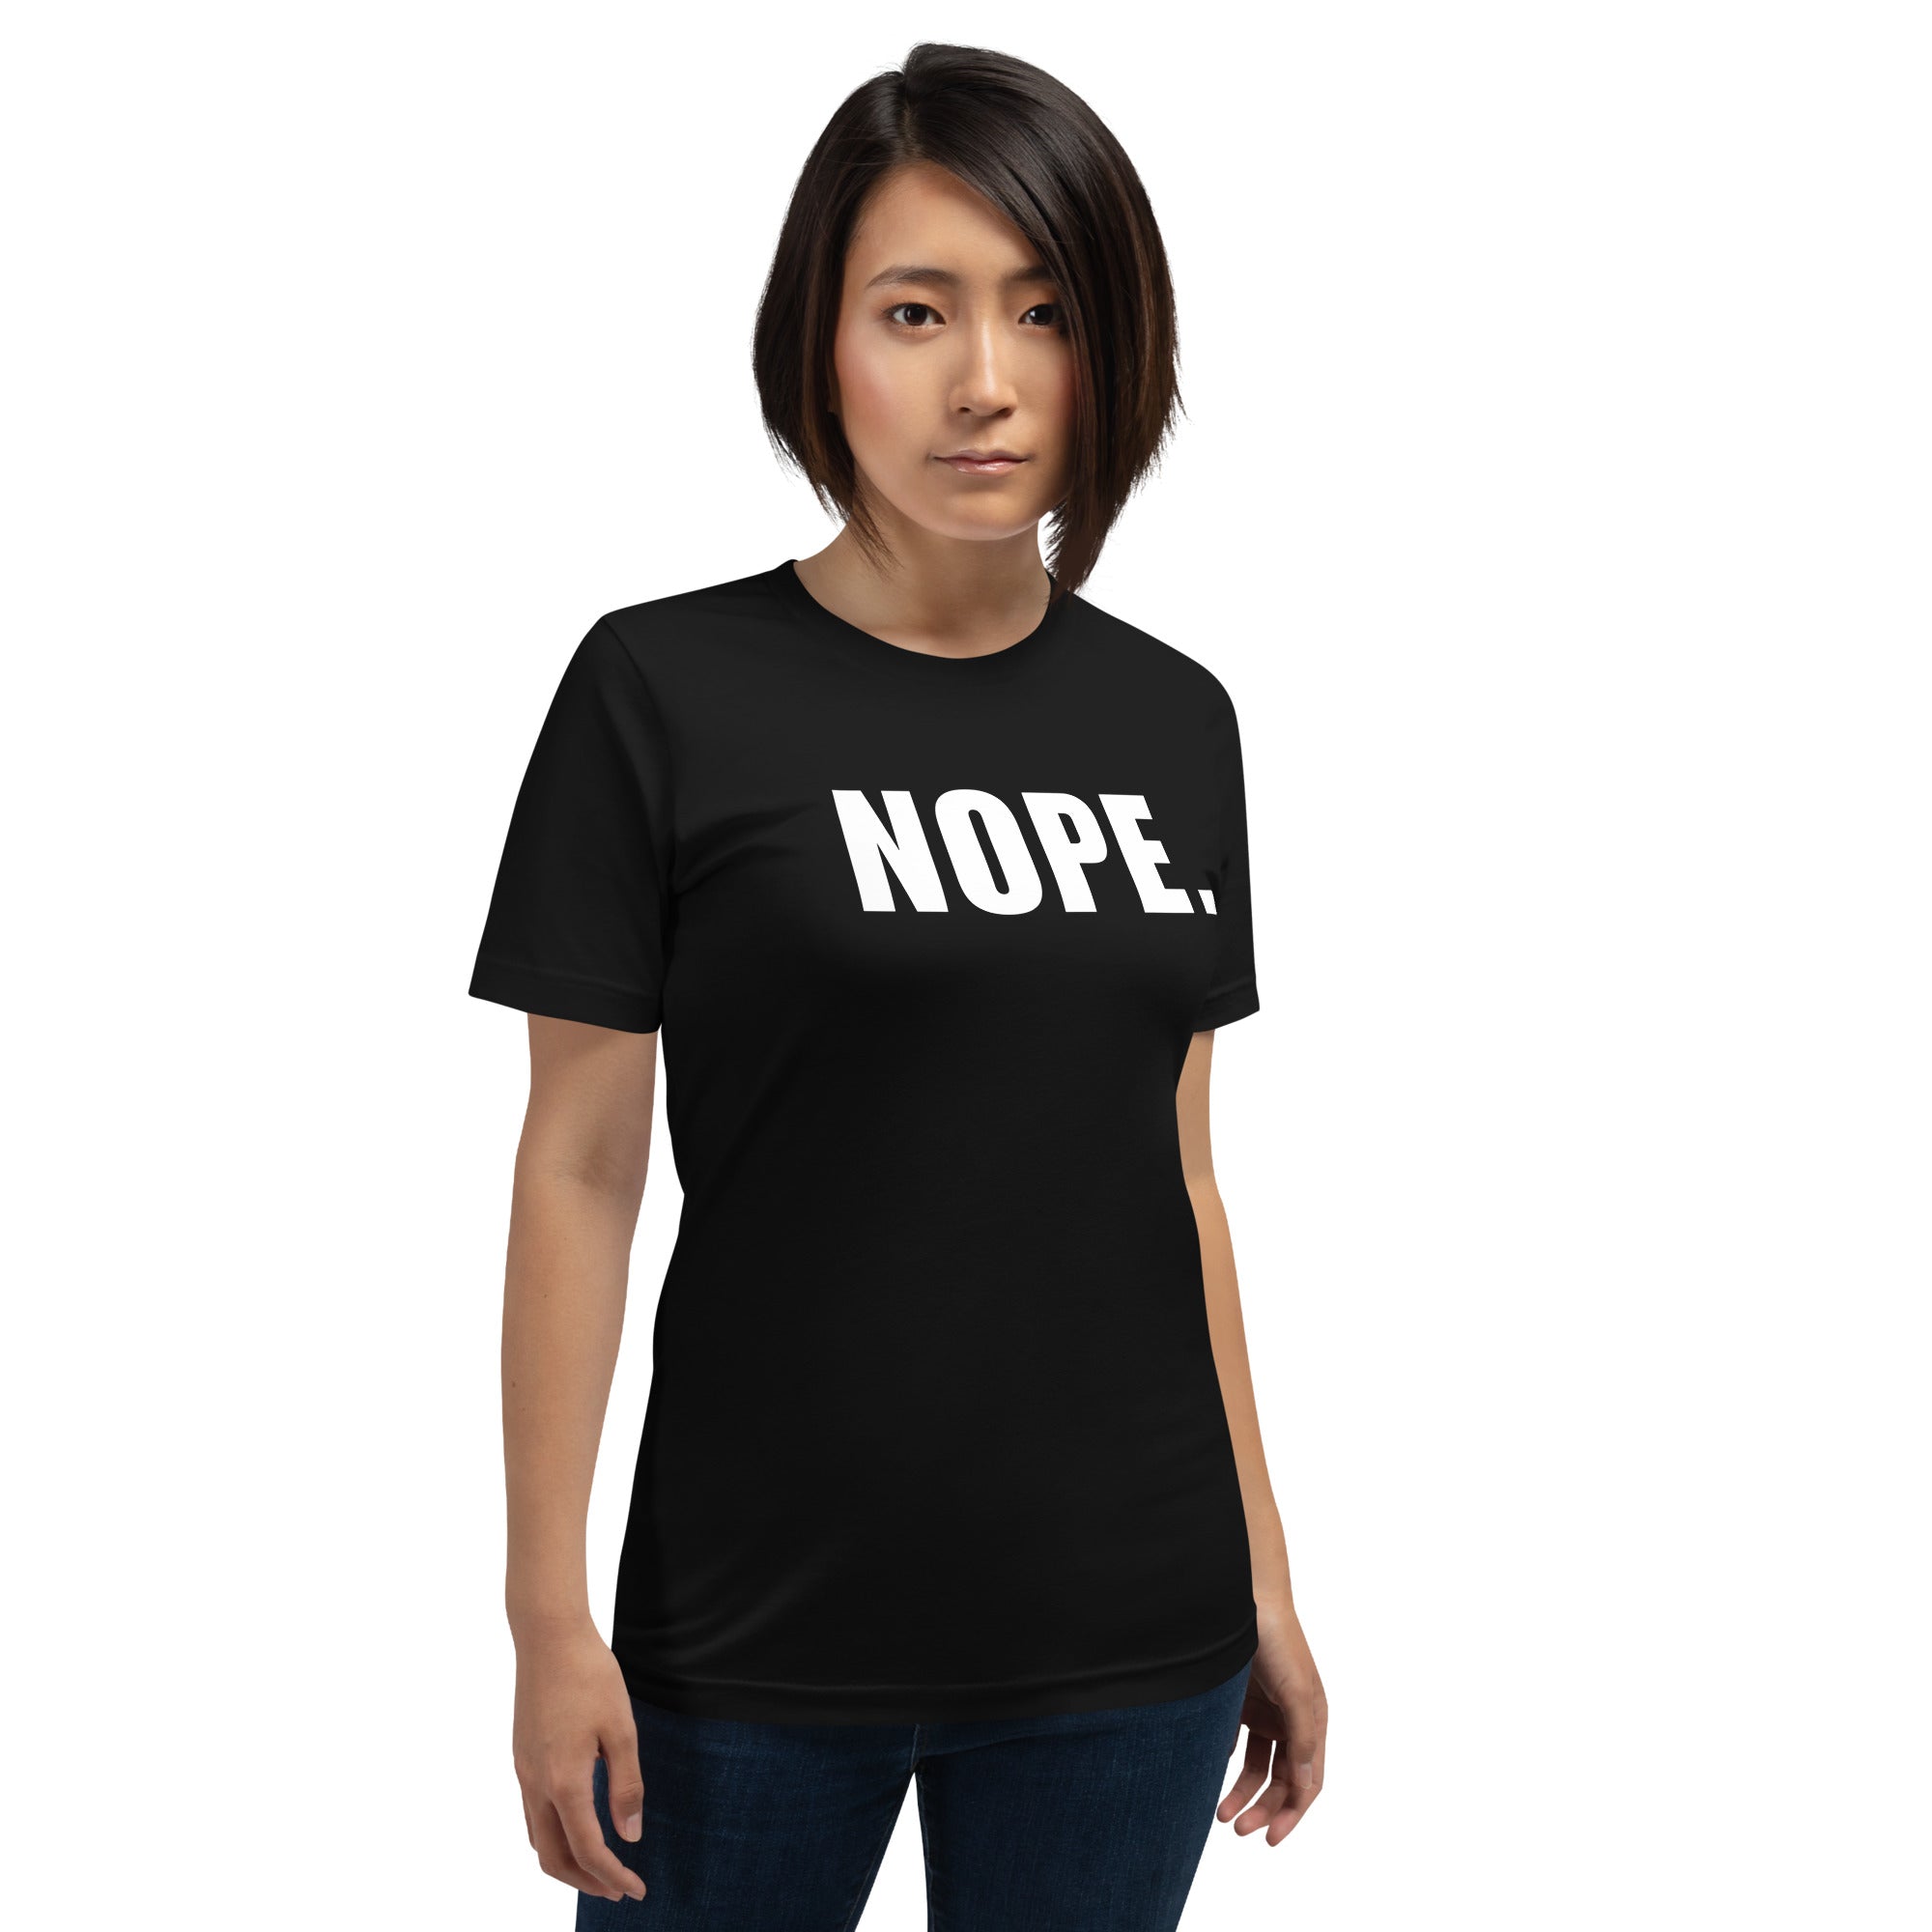 Nope. - Unisex T-Shirt